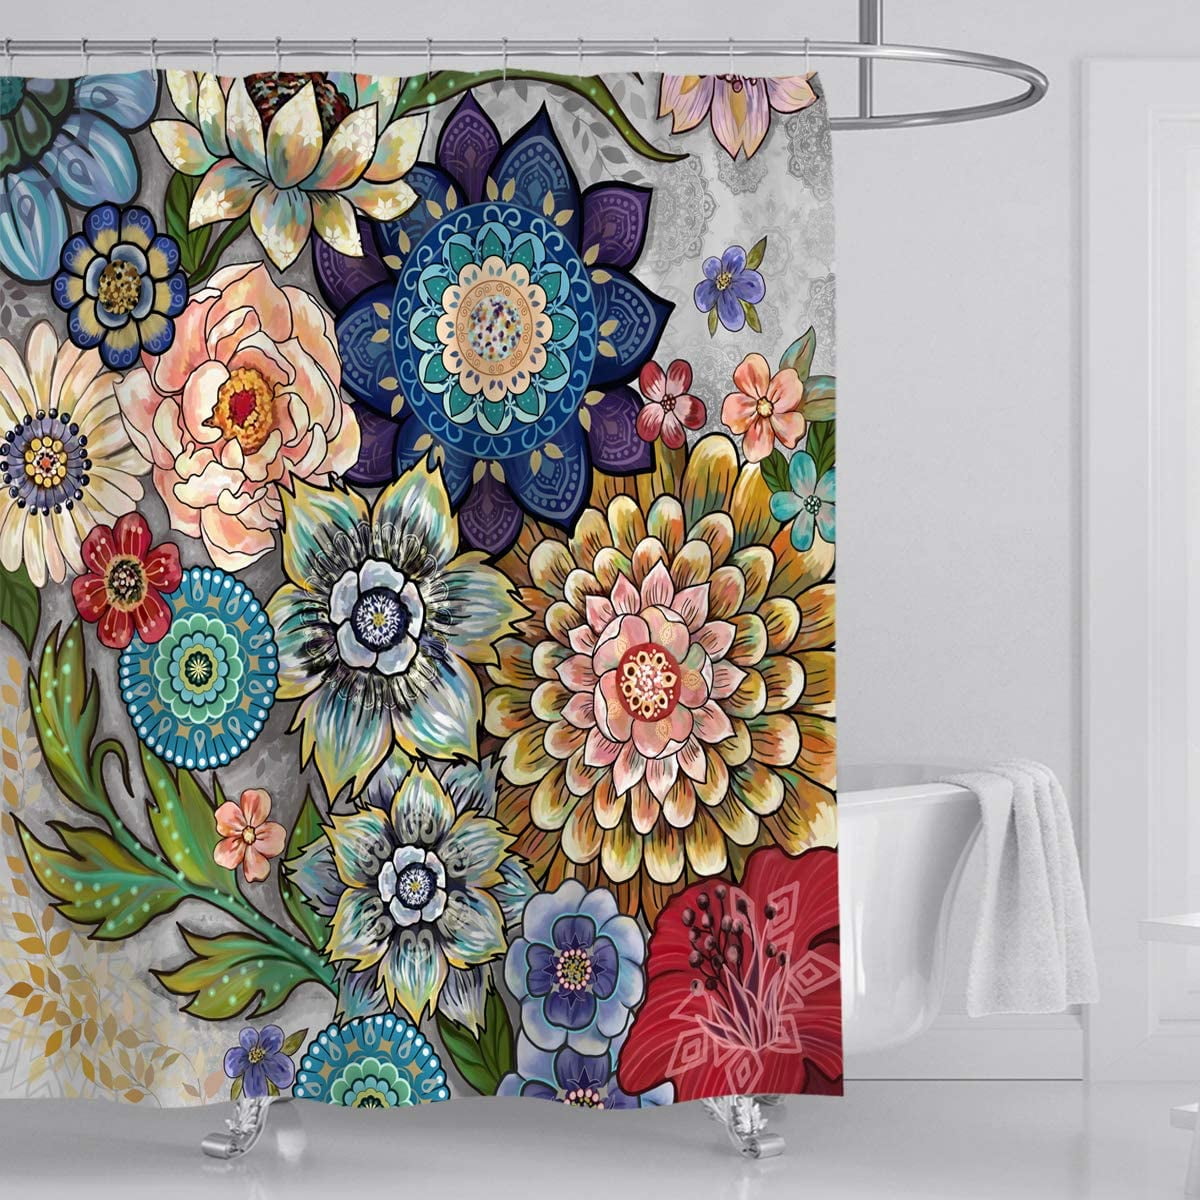 Bohemian Butterfly Shower Curtain Bathroom Mat Waterproof Fabric & 12Hooks 72" 